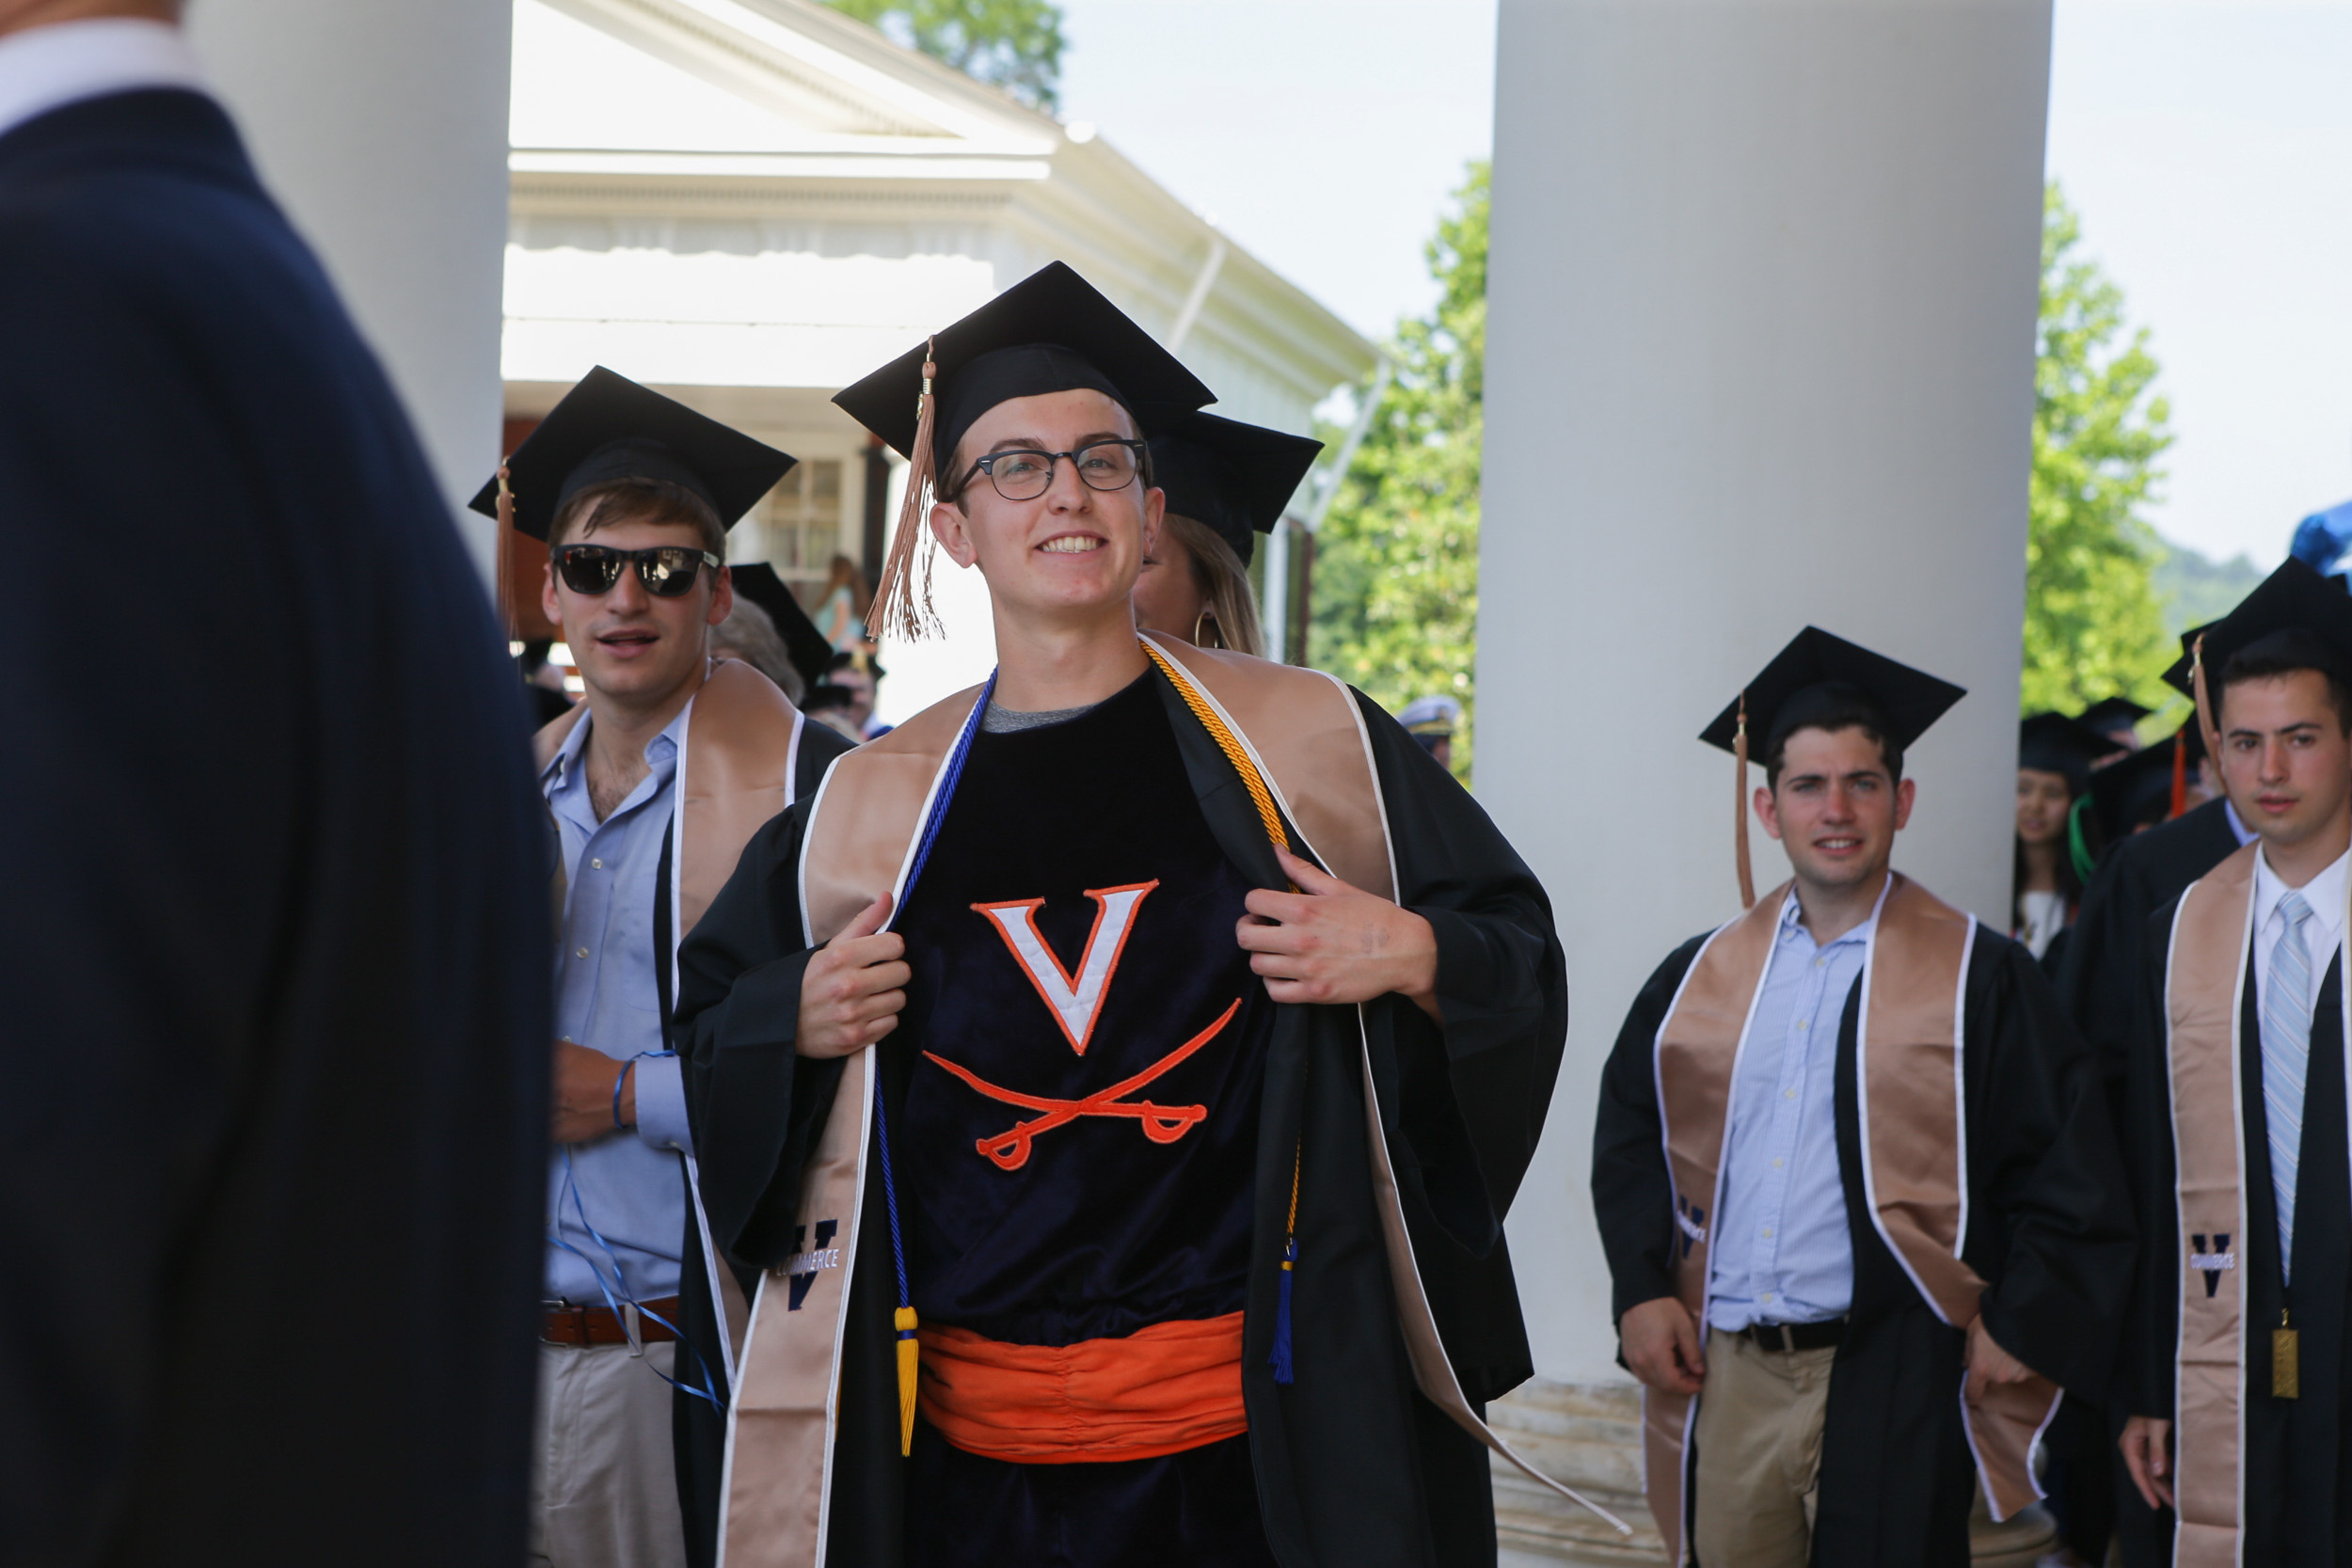 Man opens his graduation robe to see a V saber shirt and orange cumberbun